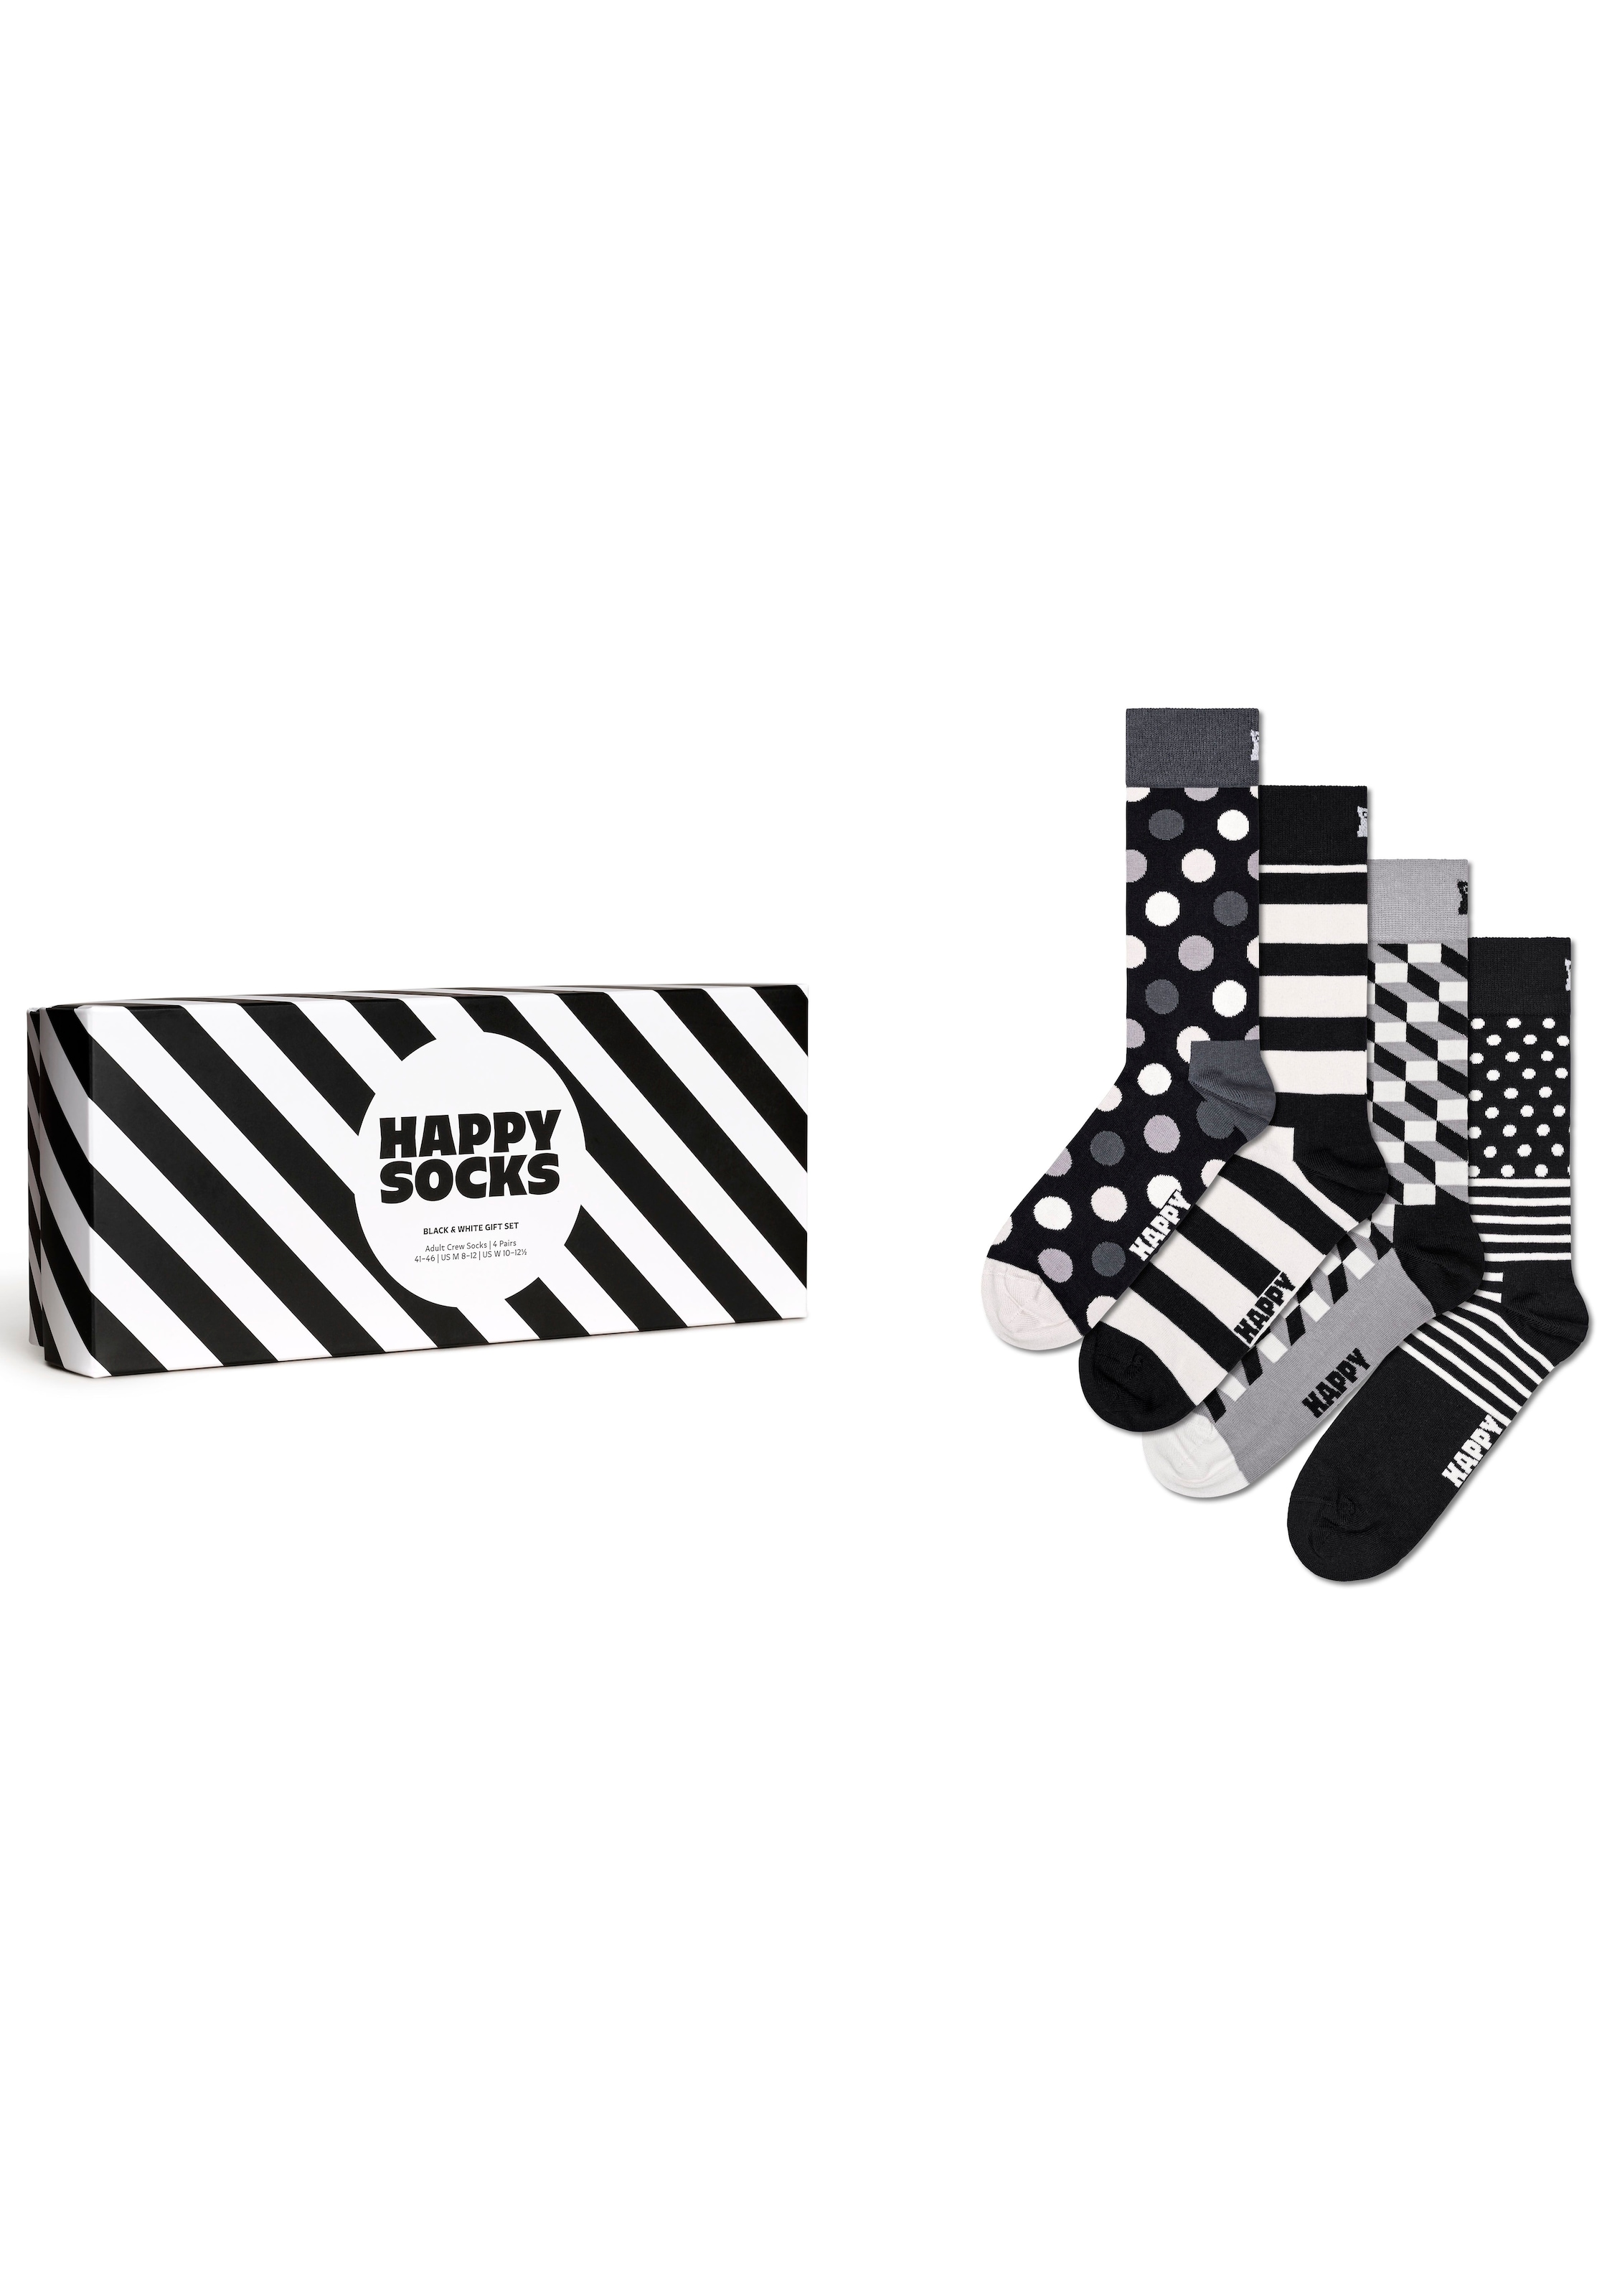 Happy Socks Socken, (Packung, 4 Paar), Classic Black & White Socks Gift Set  kaufen bei OTTO